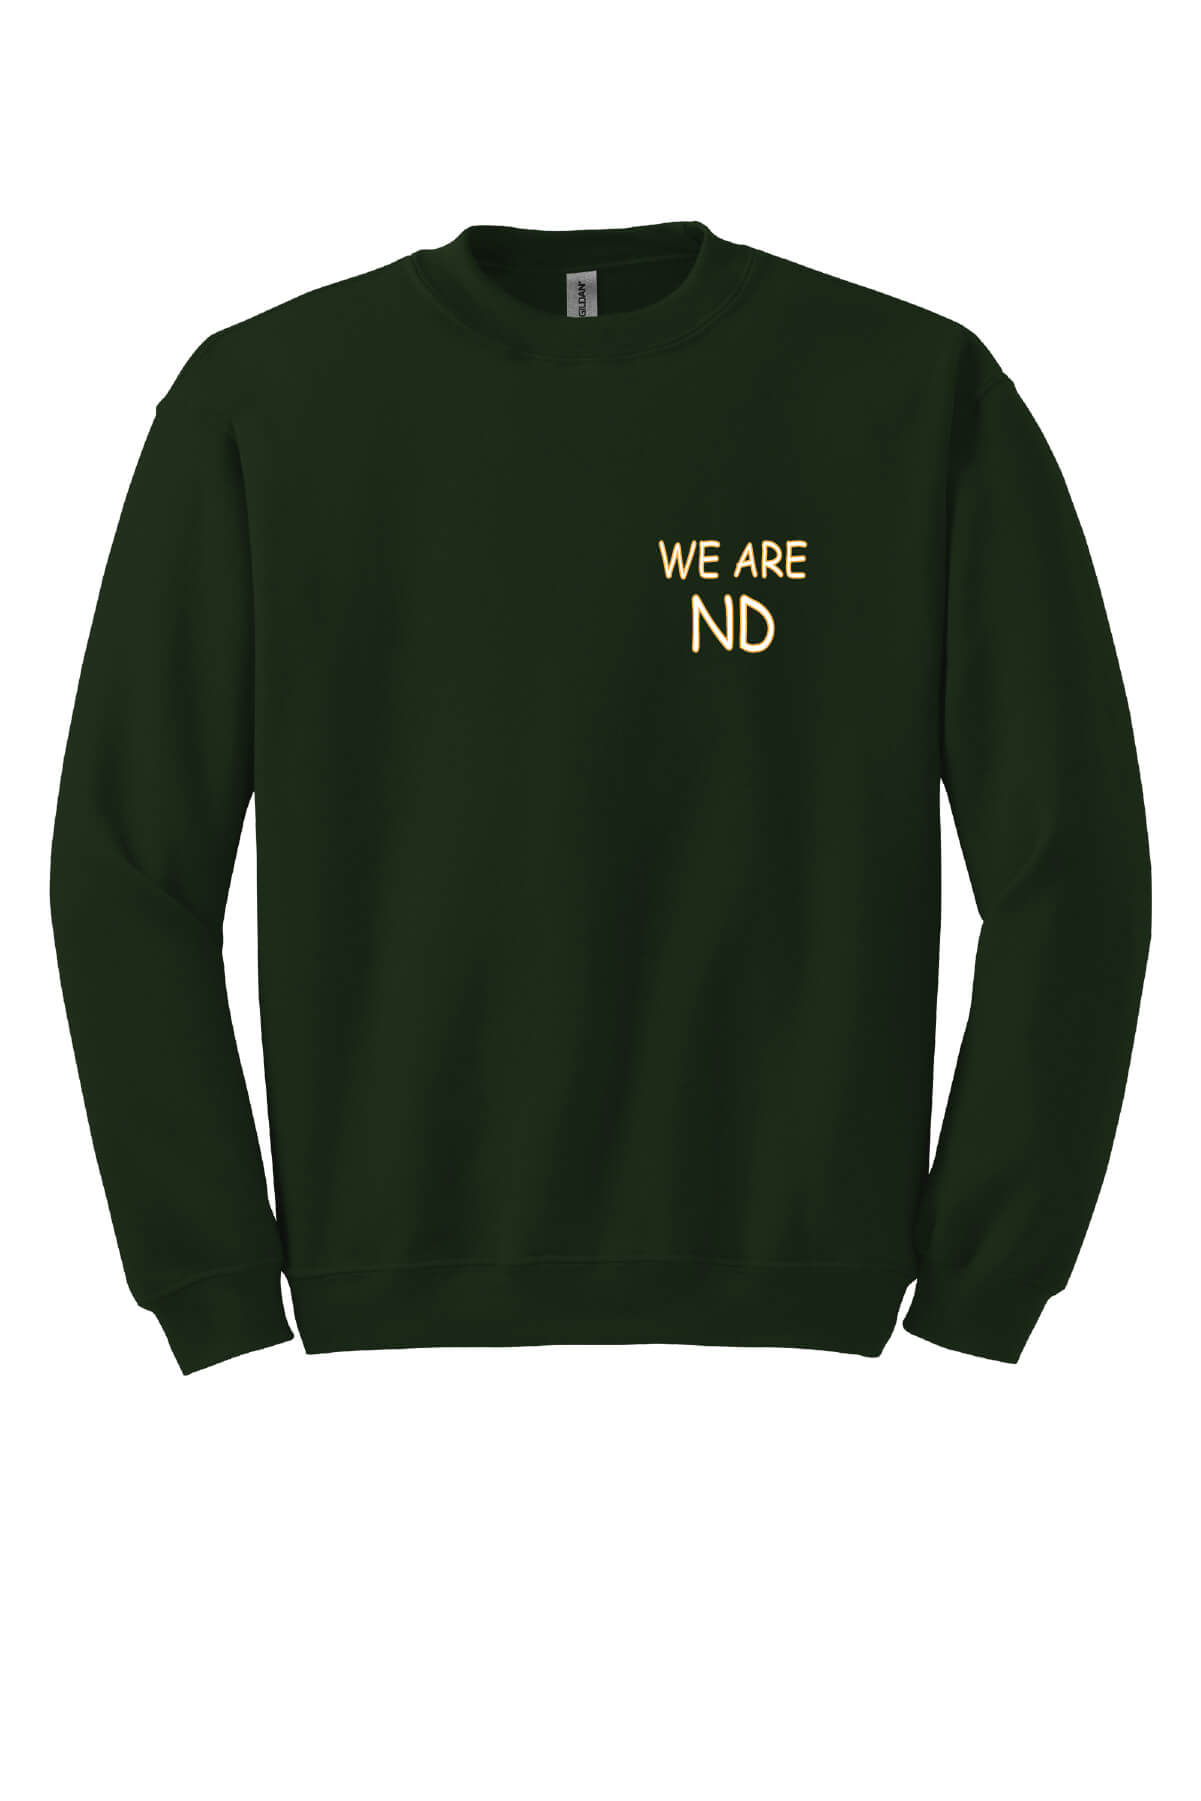 We Are ND Crewneck Sweatshirt front-green